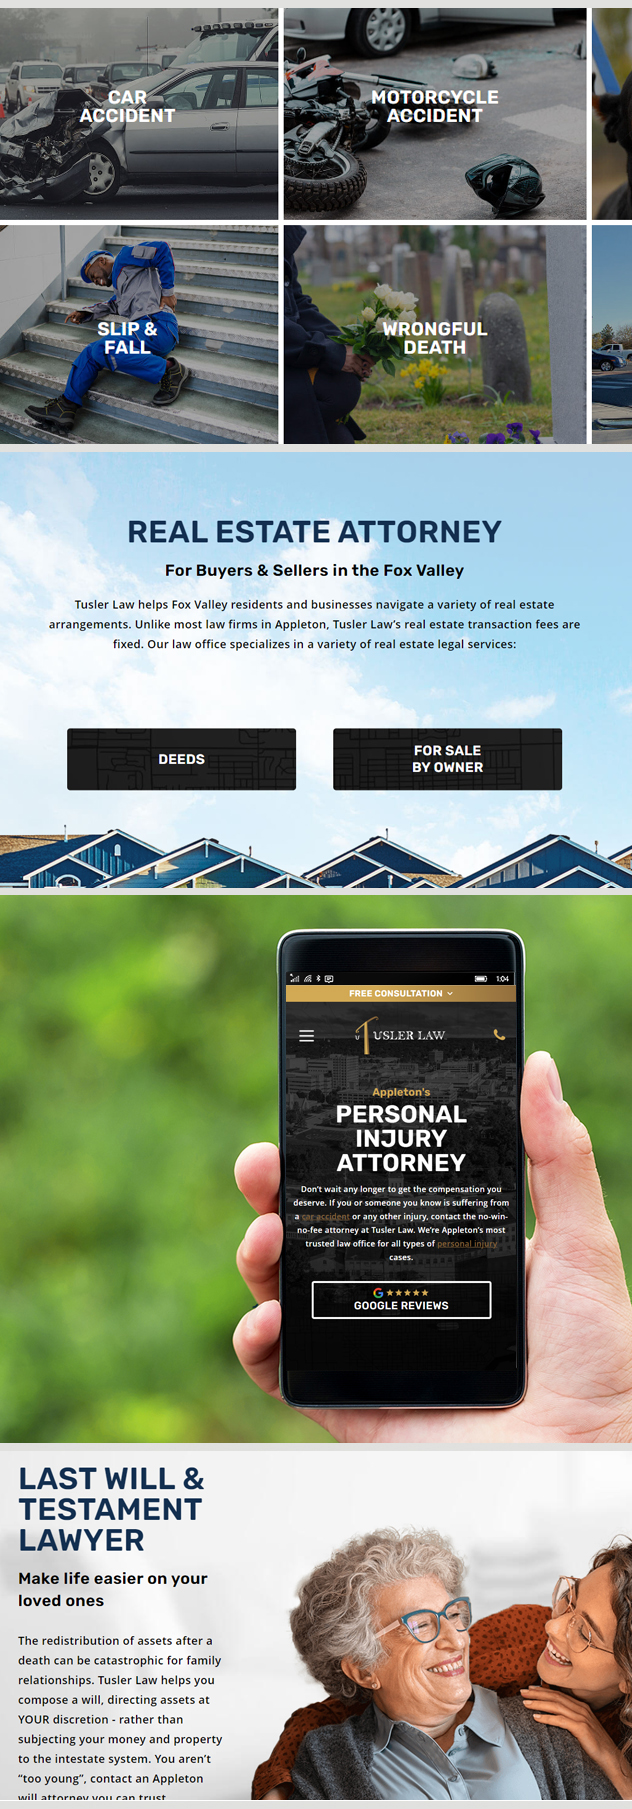 Milwaukee web marketing for Tulser Law